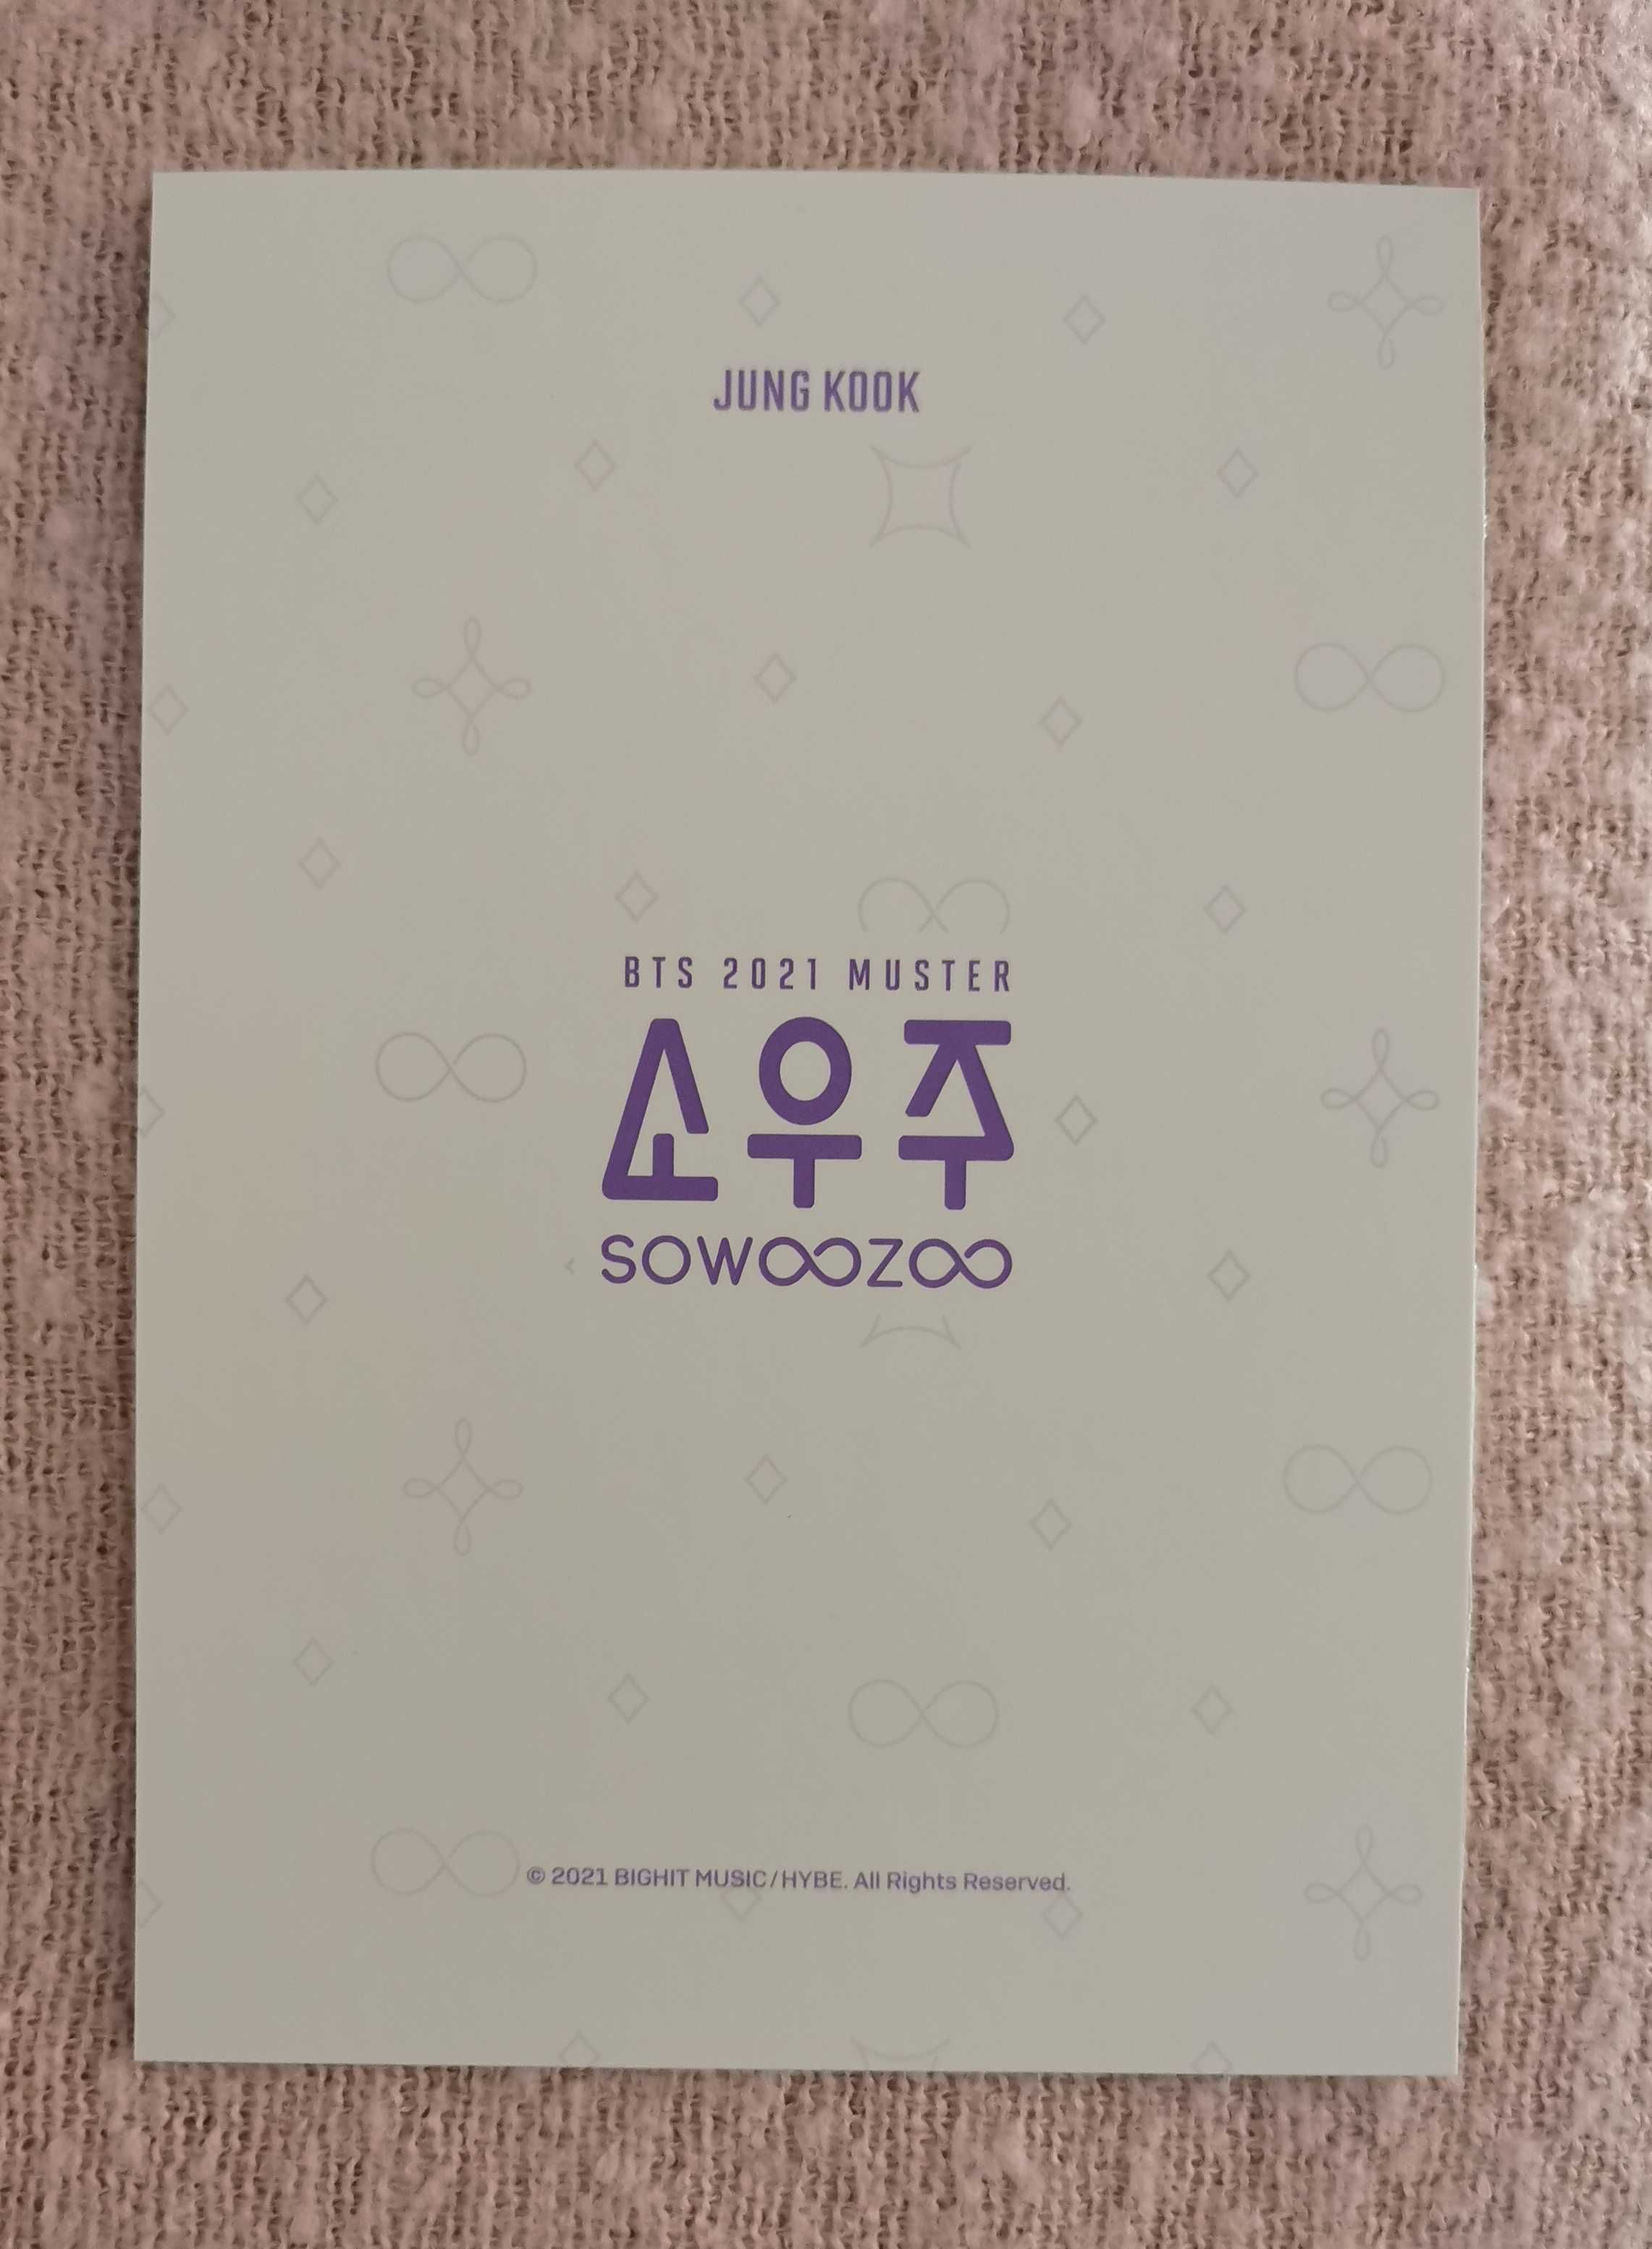 BTS Jungkook - pocztówka z Sowoozoo